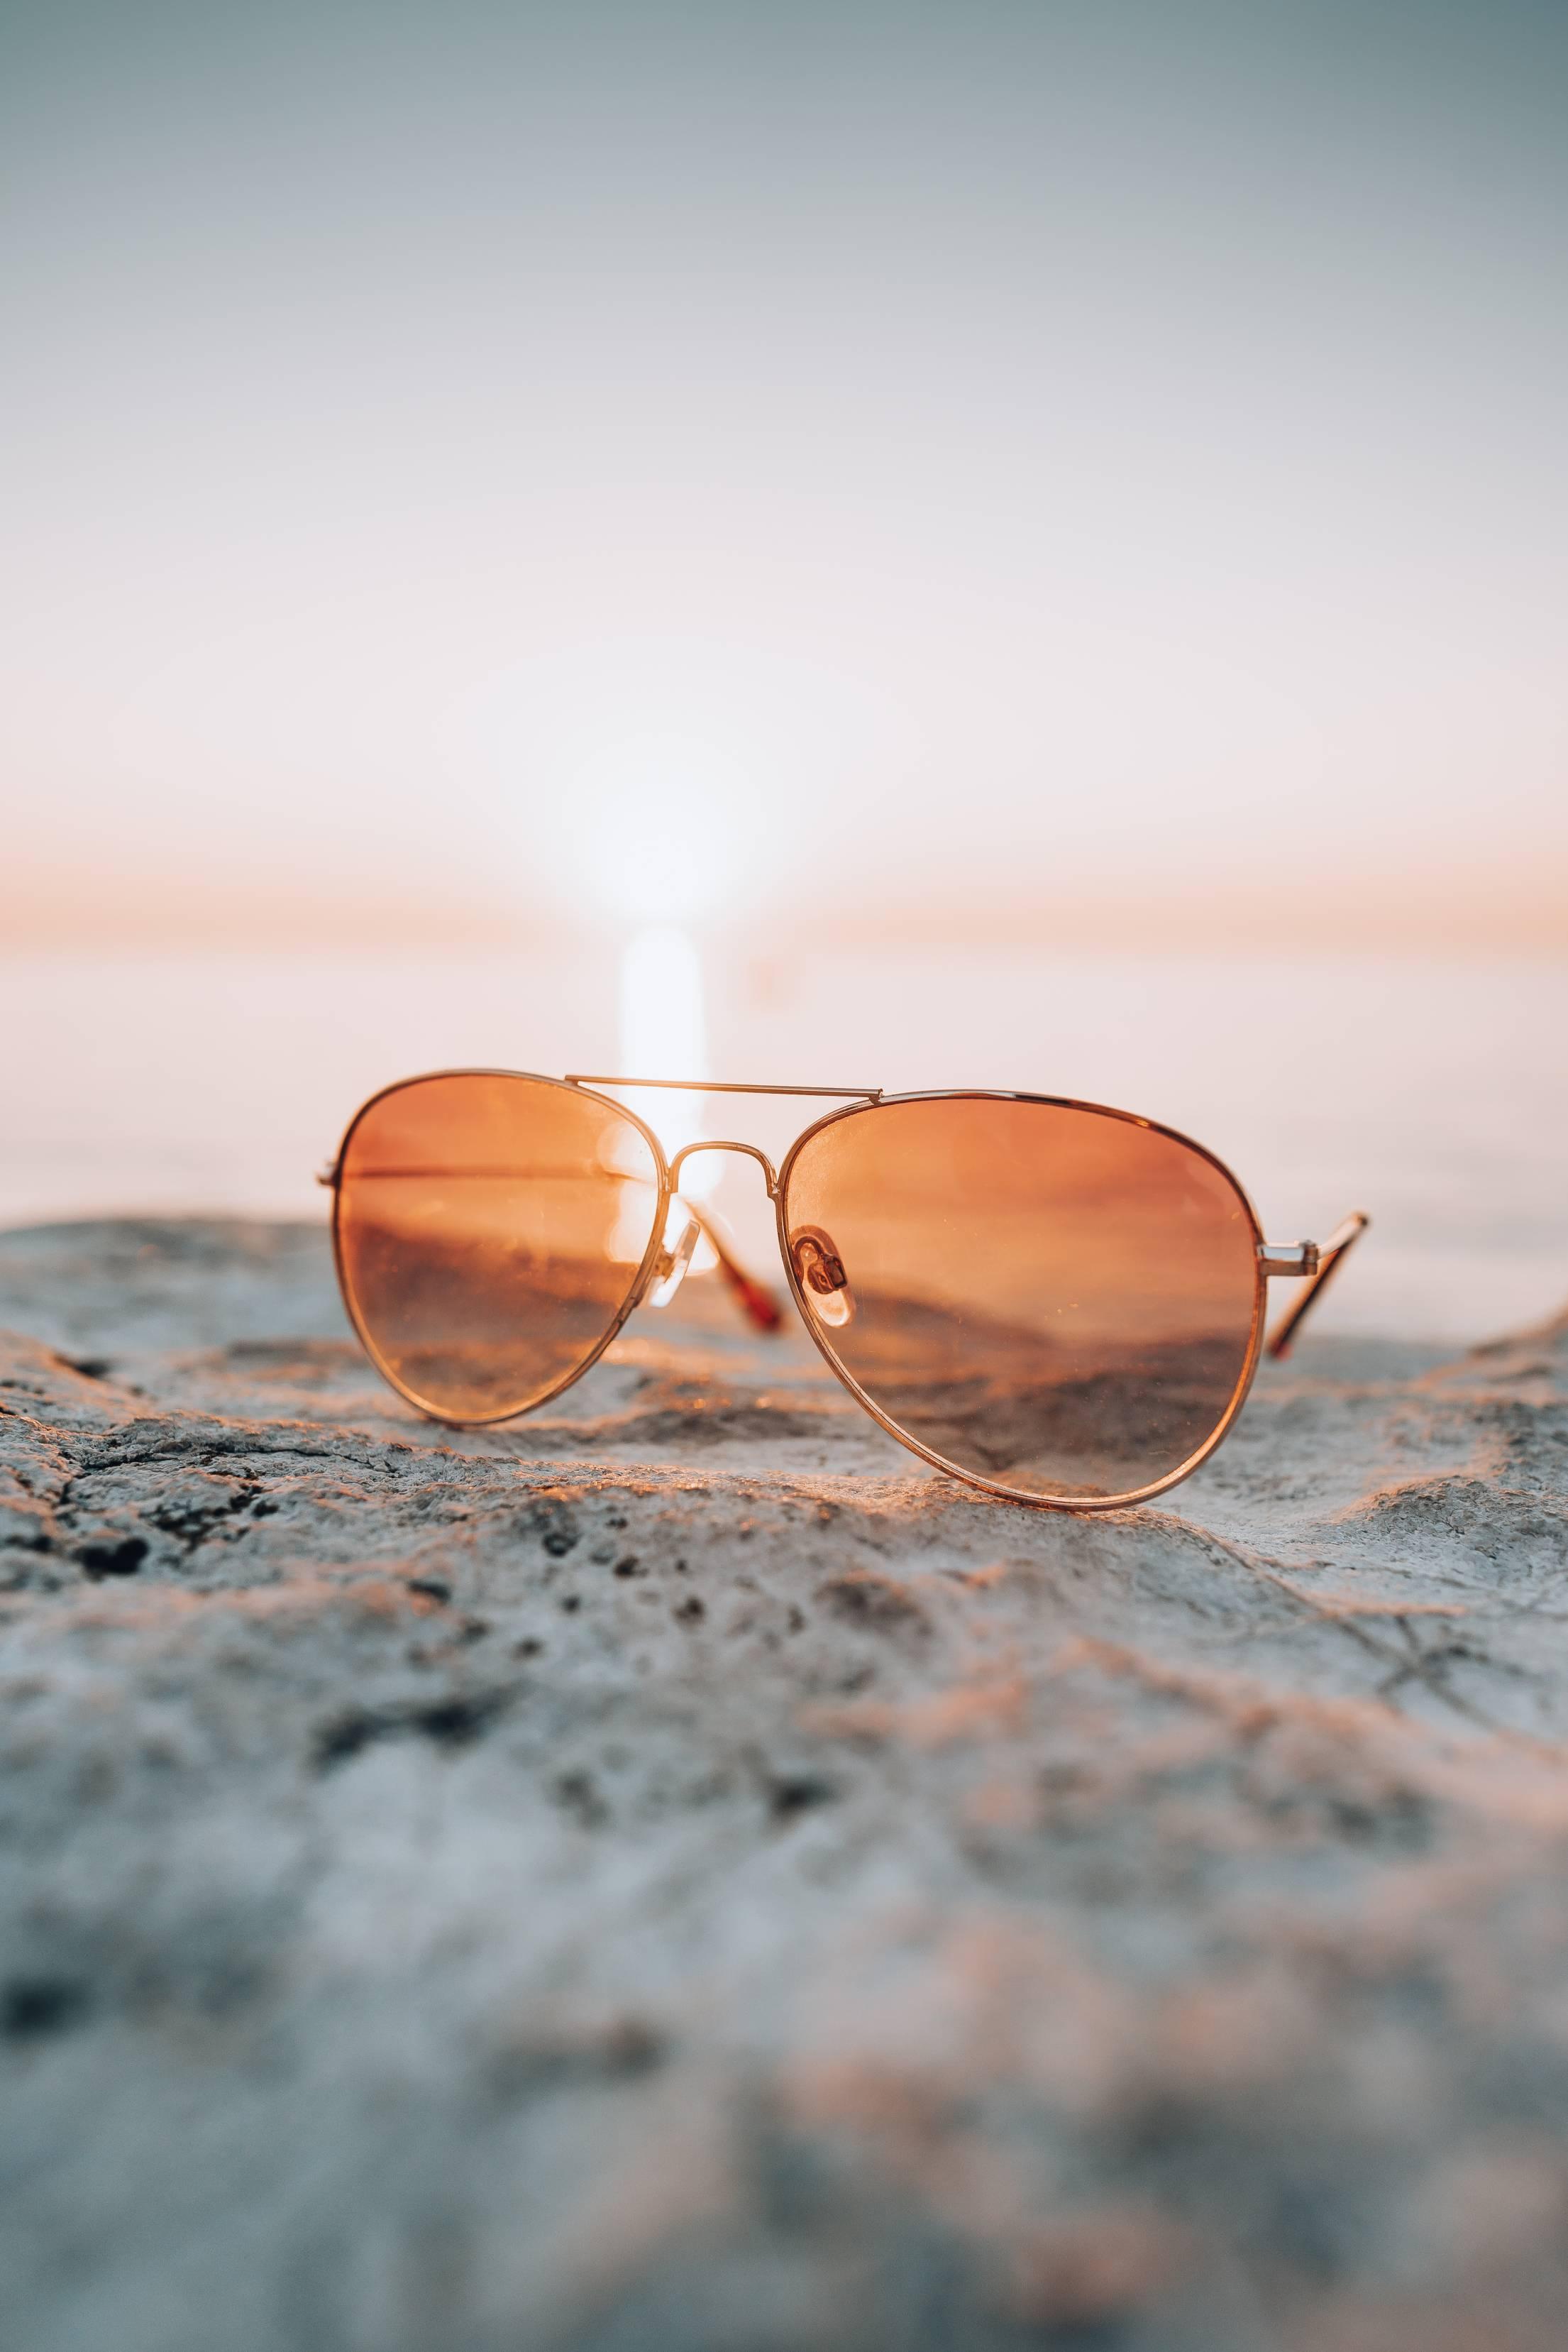 Fashion Sunglasses Sea Sunset and Stone Free Stock Photo picjumbo